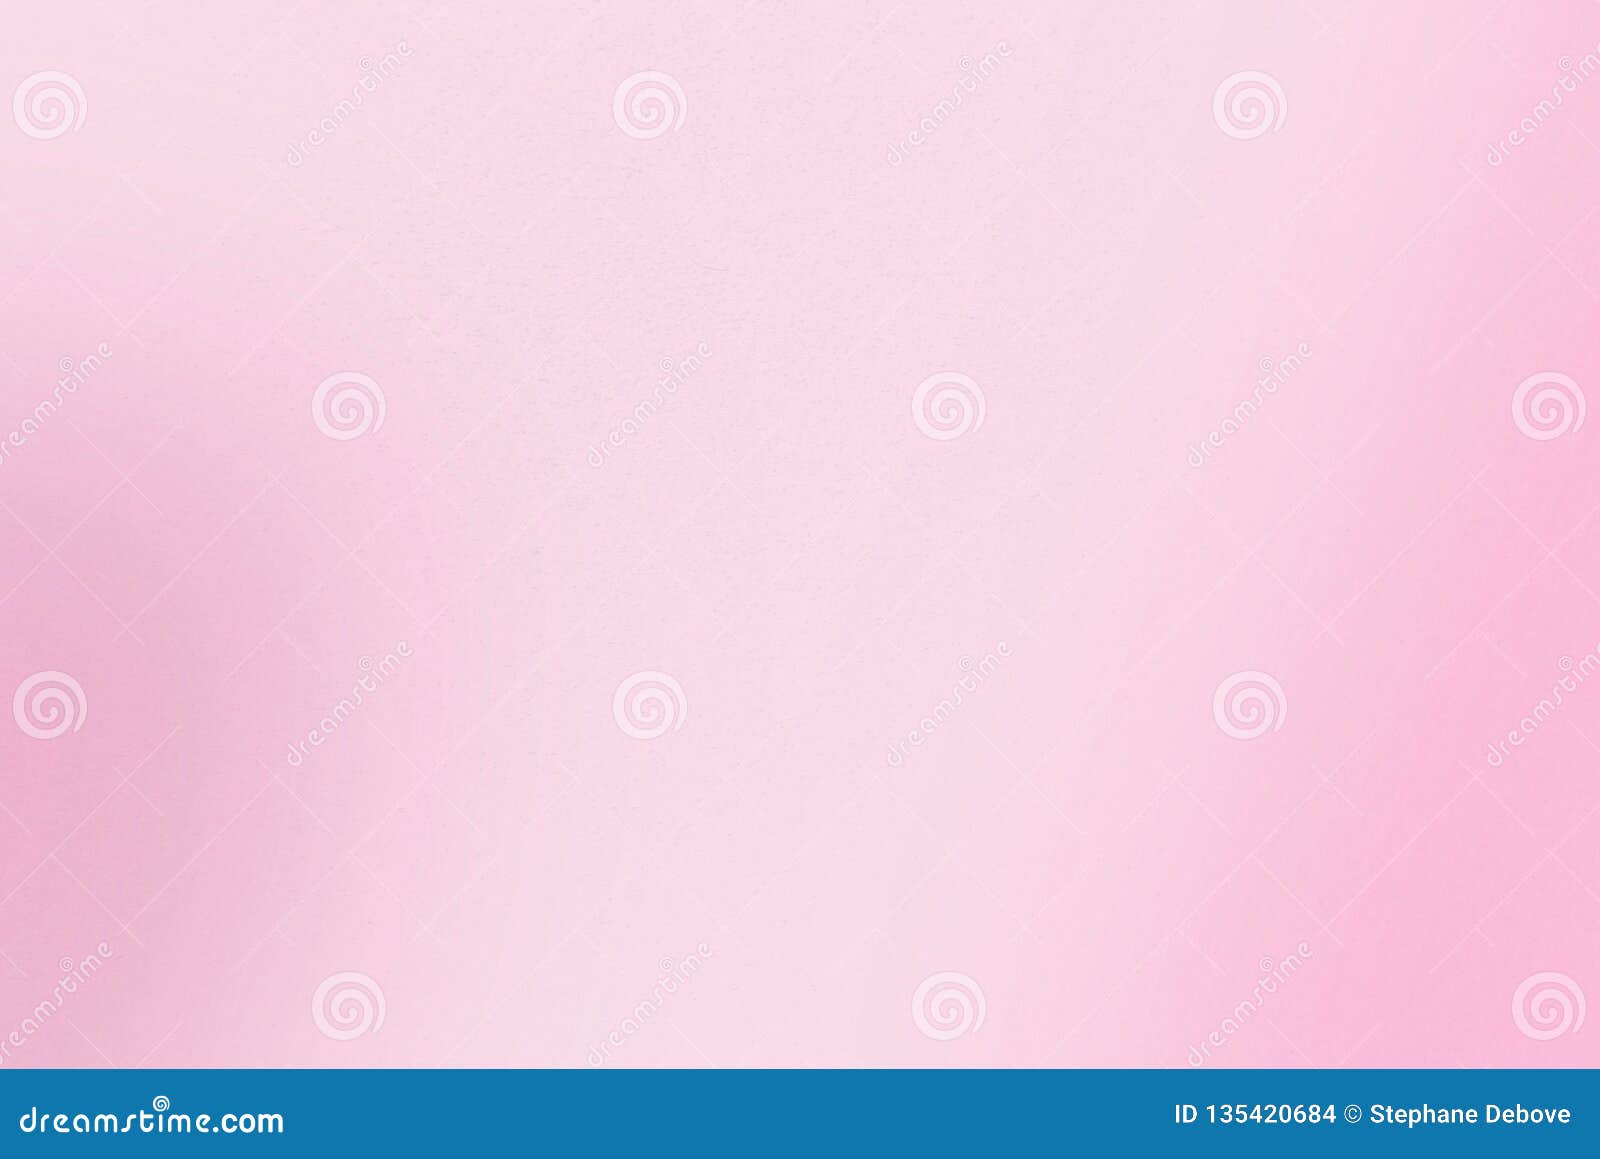 Pink Gradient Wallpaper Background With Cameo Pink Dark